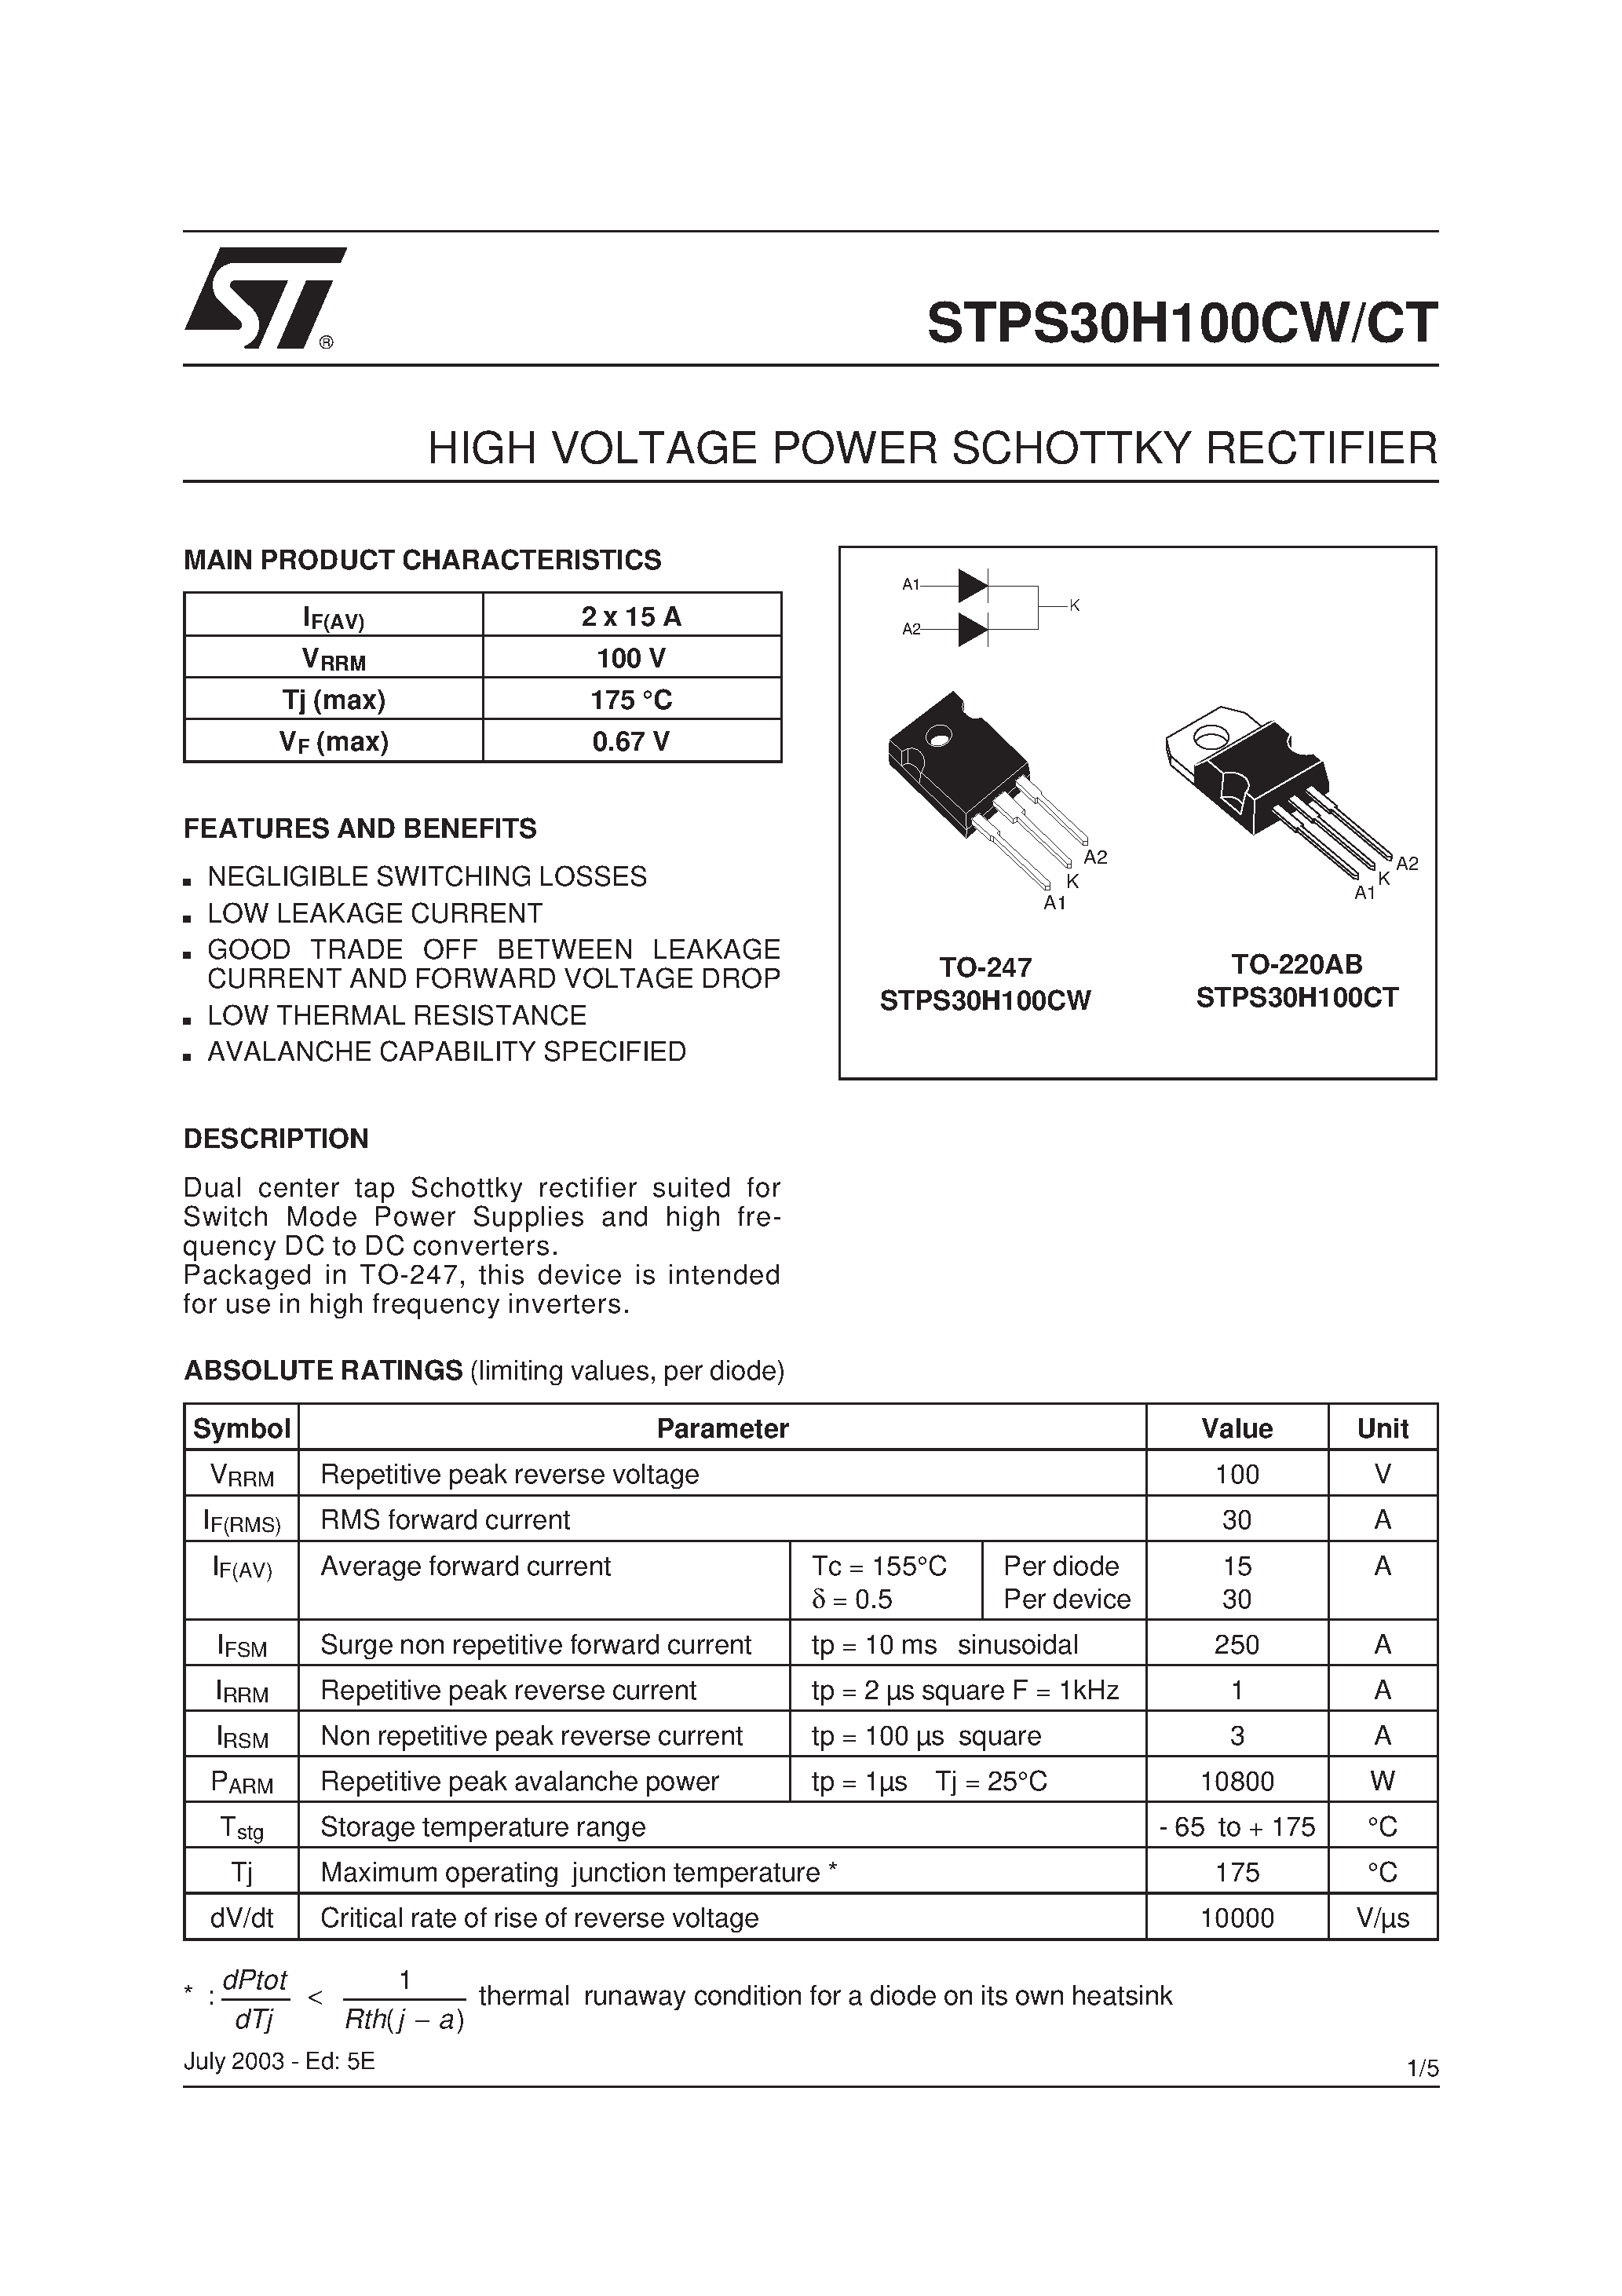 Даташит STPS30H100CT - (STPS30H100CW/CT) HIGH VOLTAGE POWER SCHOTTKY RECTIFIER страница 1